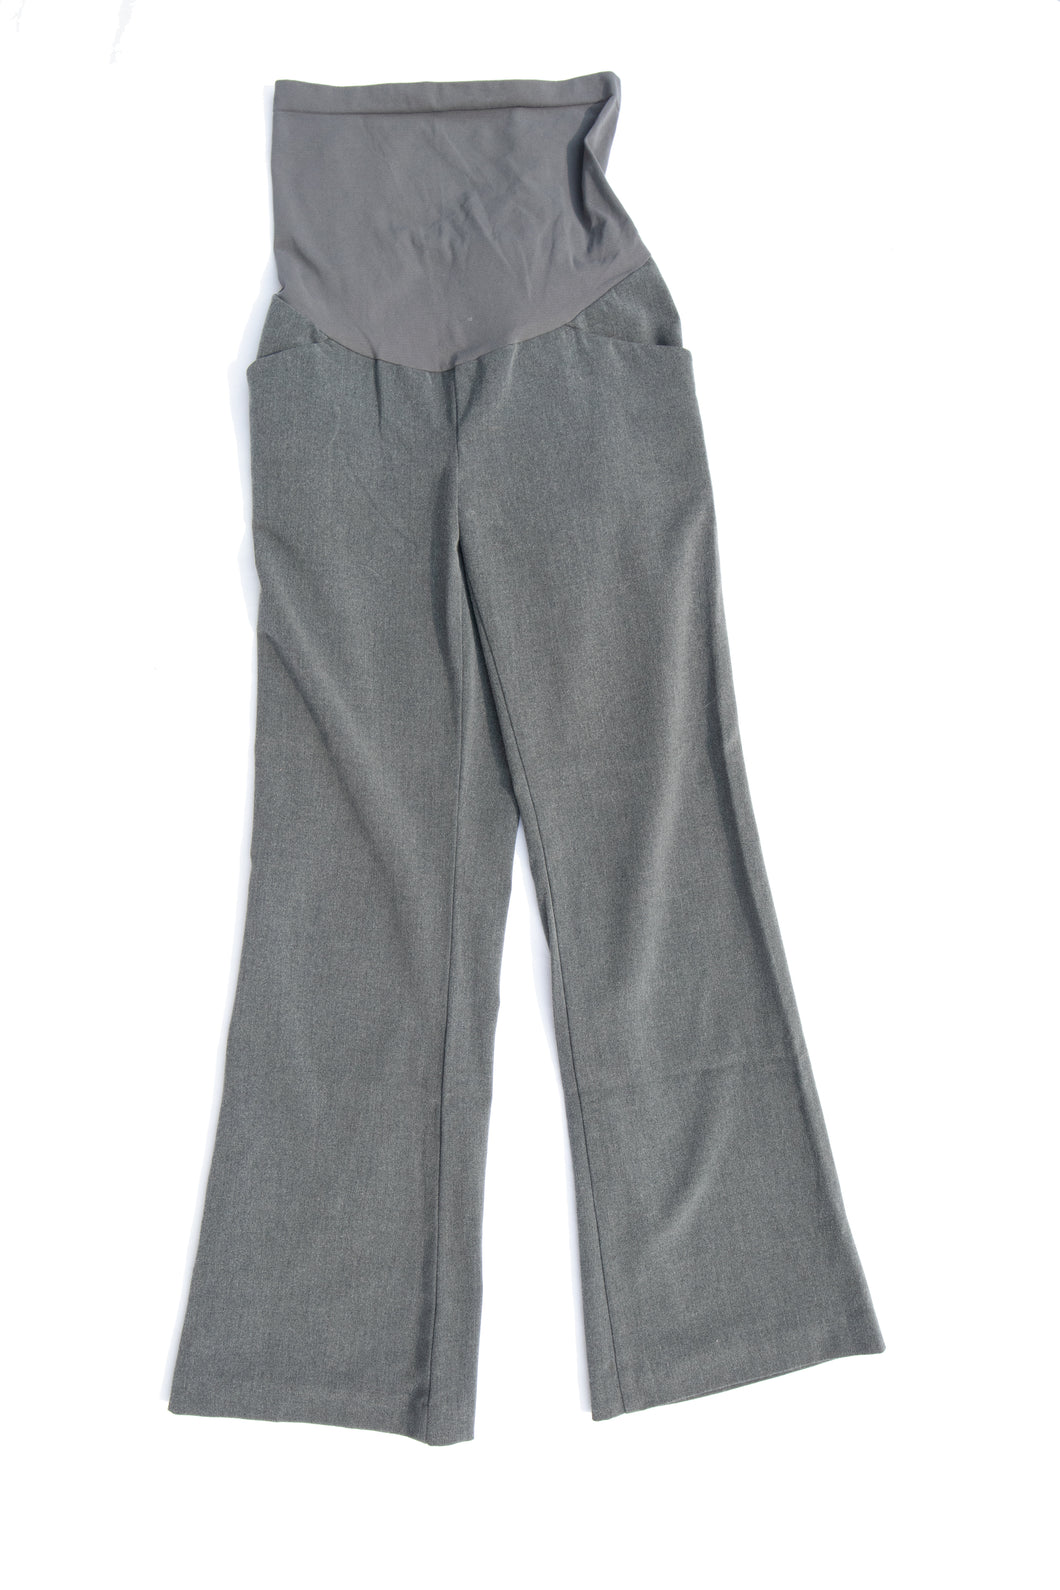 PXS Motherhood Grey Dress Pants in Petite XS